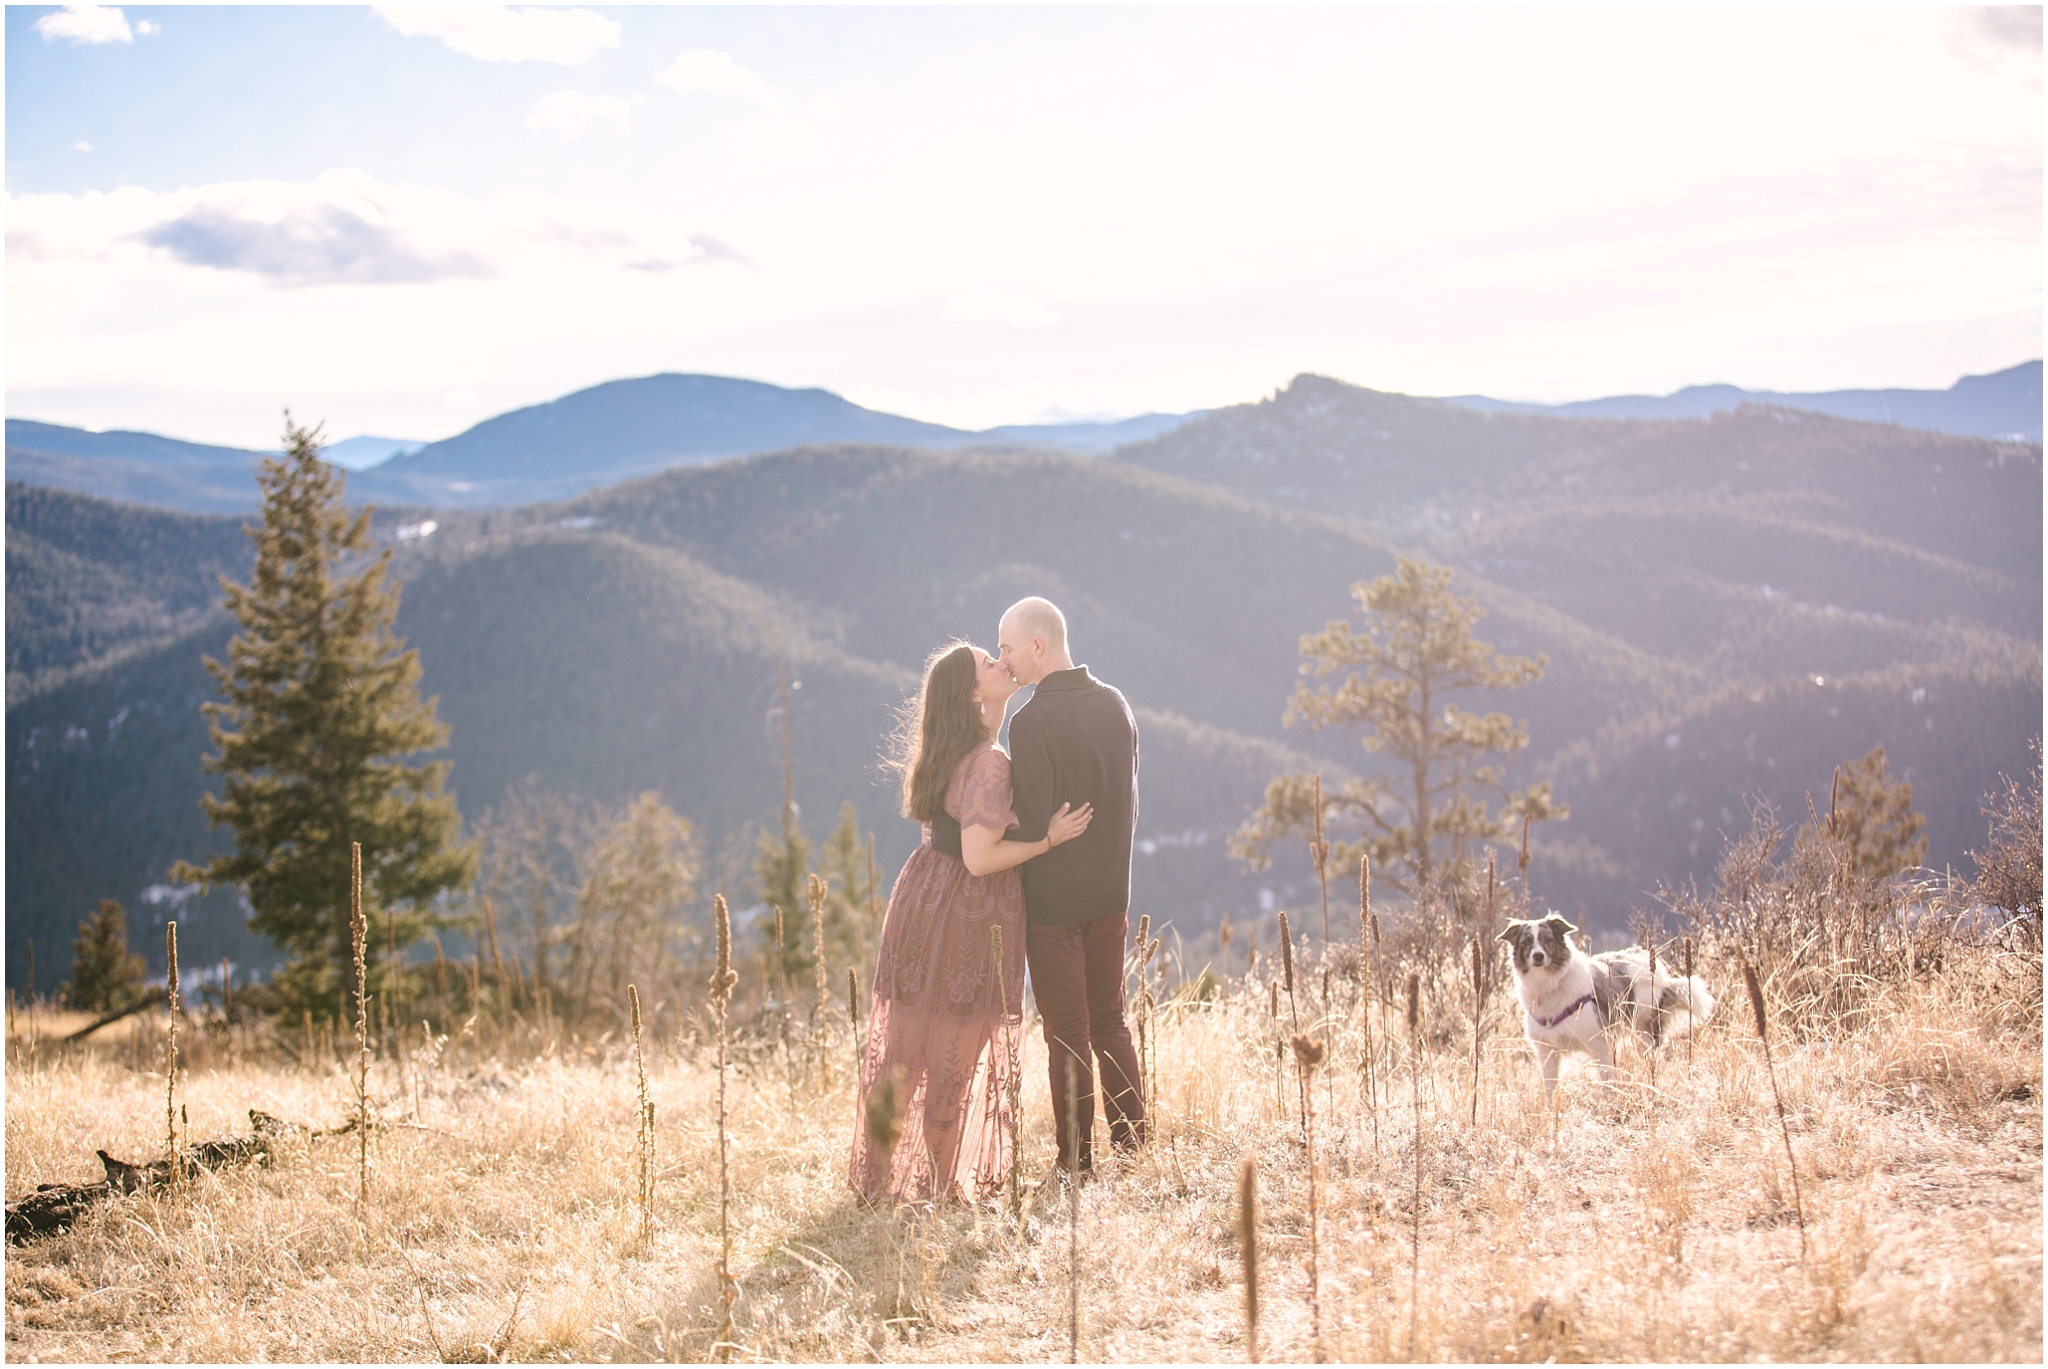 Mount Falcon - Favorite Colorado Mountain Locations for Adventurous Engagement Pictures